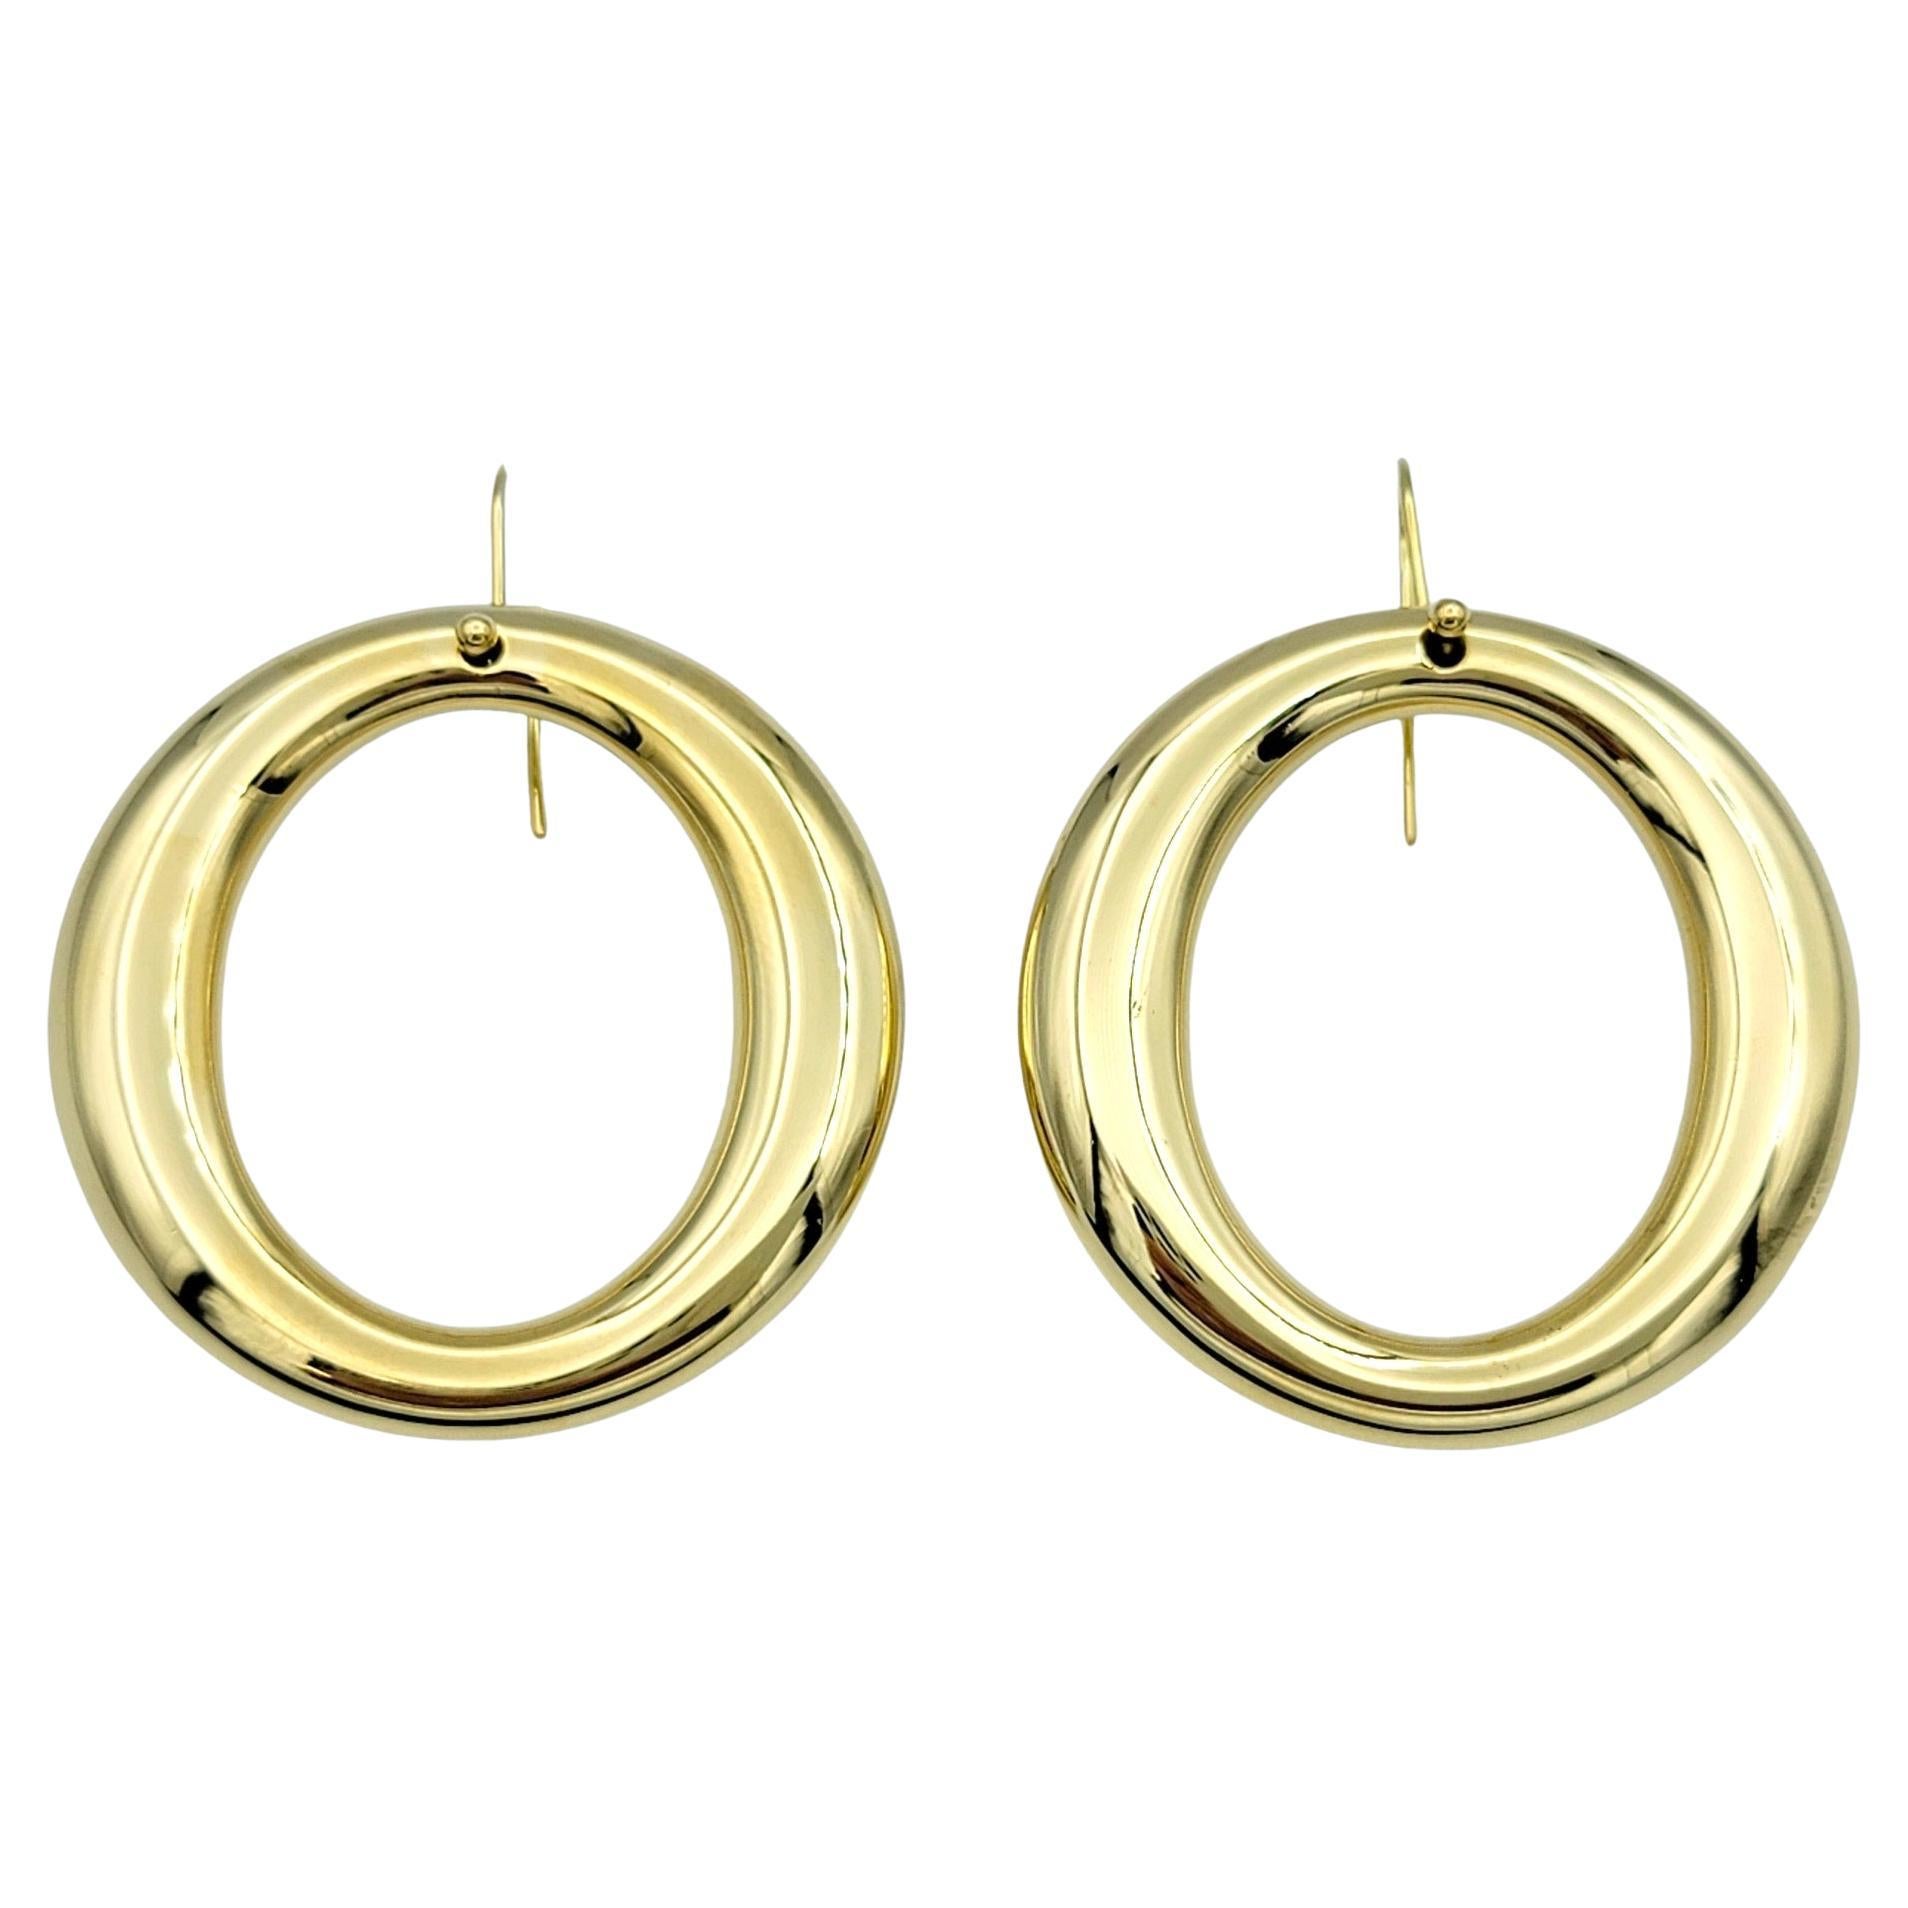 Tiffany & Co. Elsa Peretti Sevillana Circle Earrings Set in 18 Karat Yellow Gold